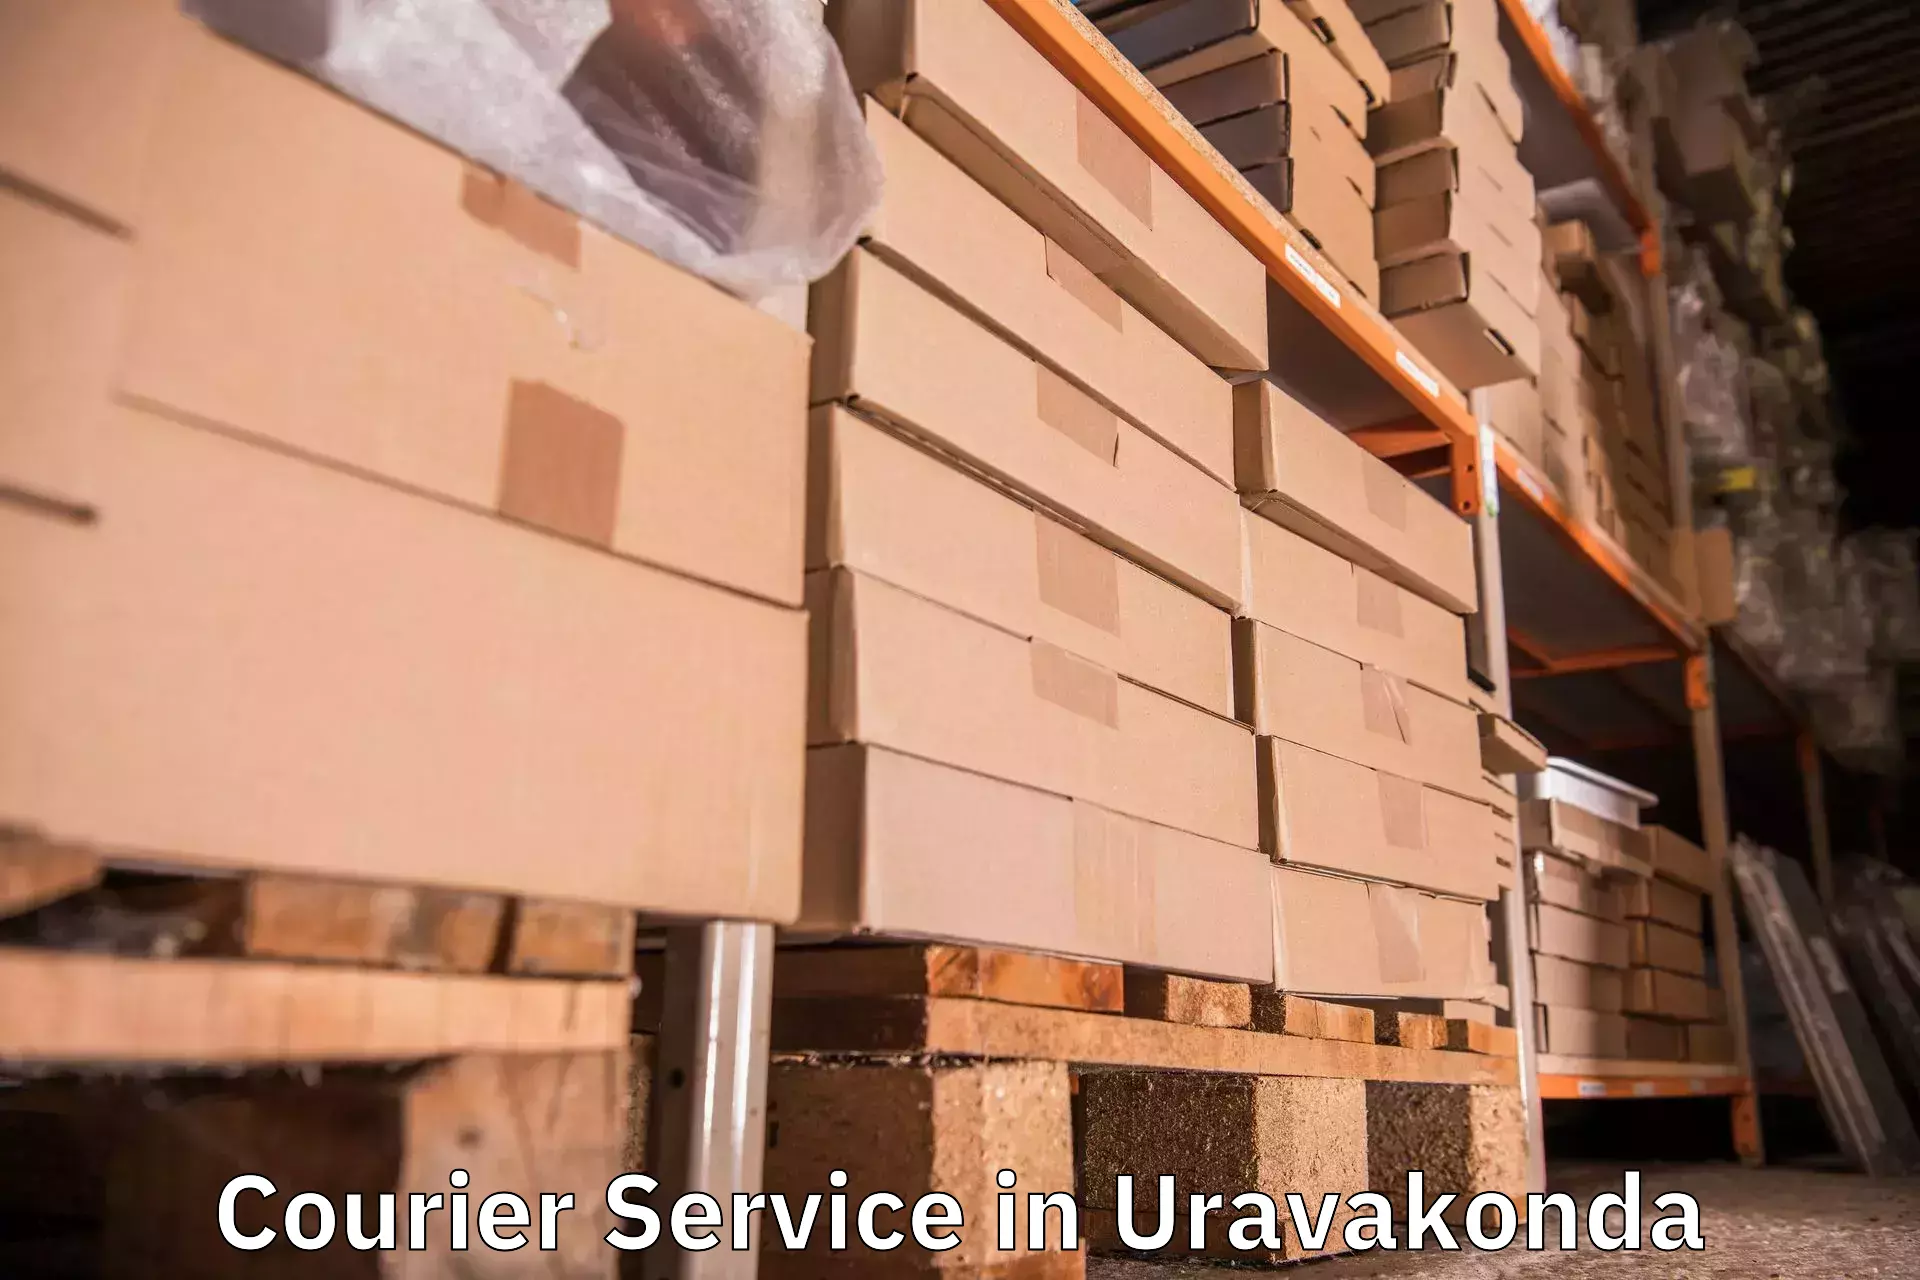 Multi-service courier options in Uravakonda